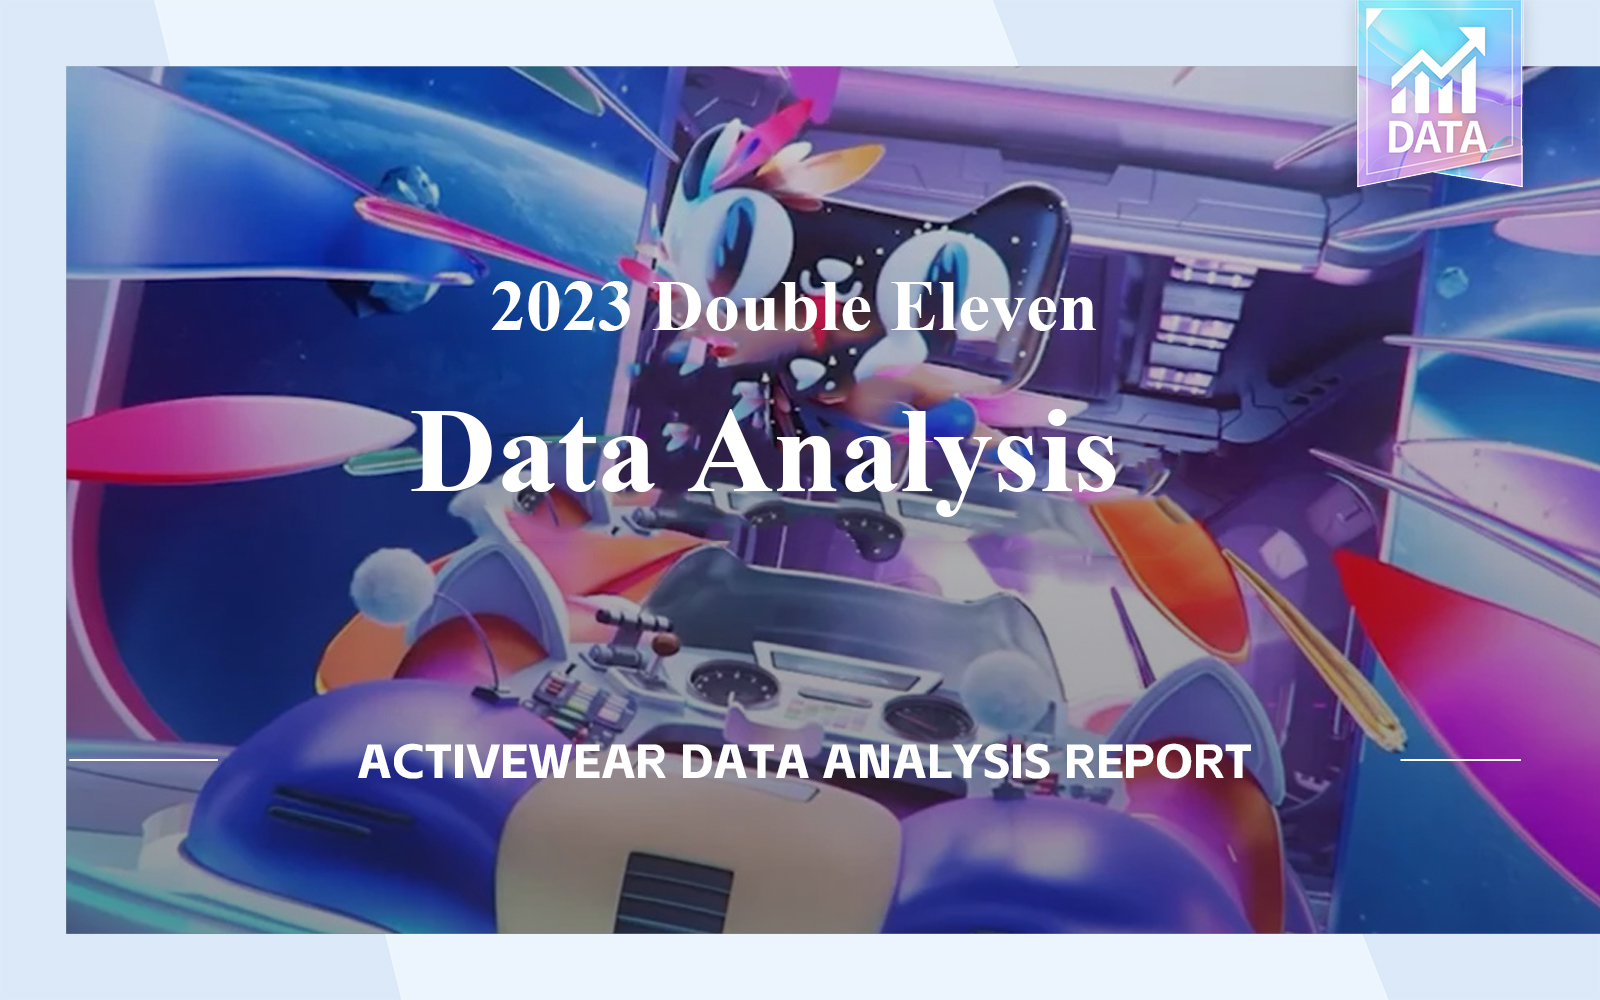 2023 Double Eleven Data Analysis of Athleisure